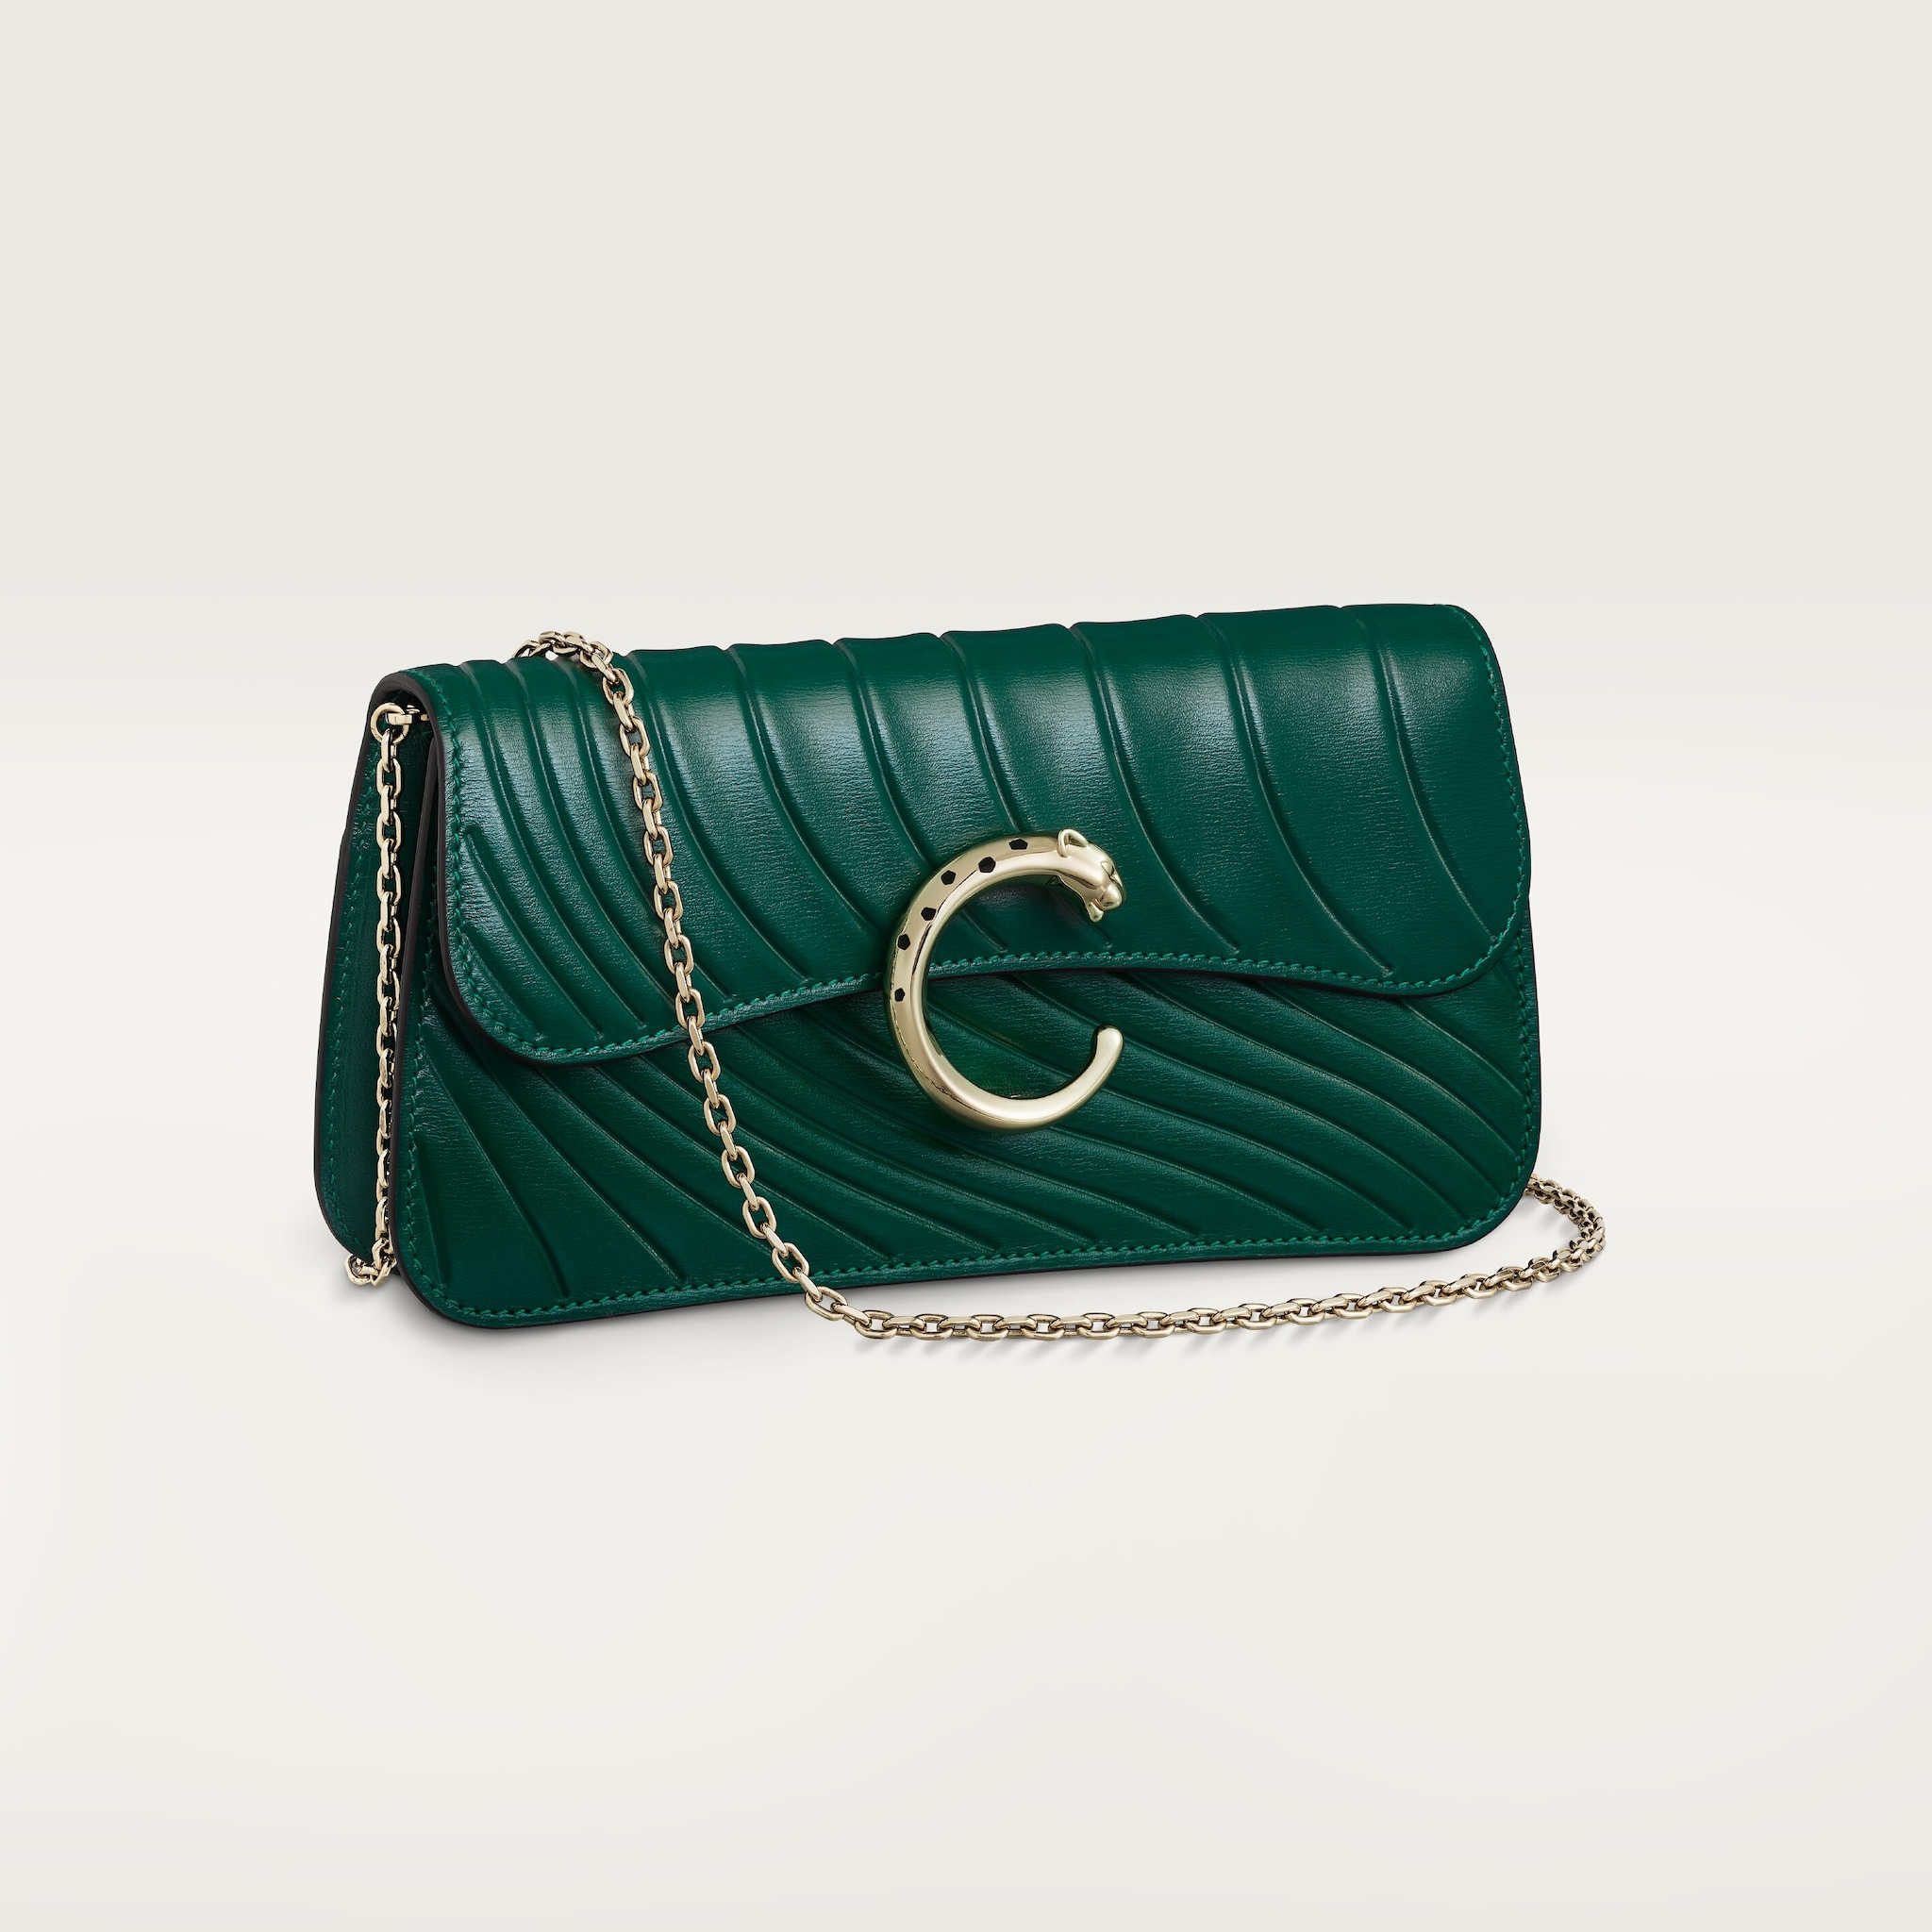 Chain bag mini model, Panthère de CartierEmerald green calfskin with embossed Cartier signature motif, golden finish